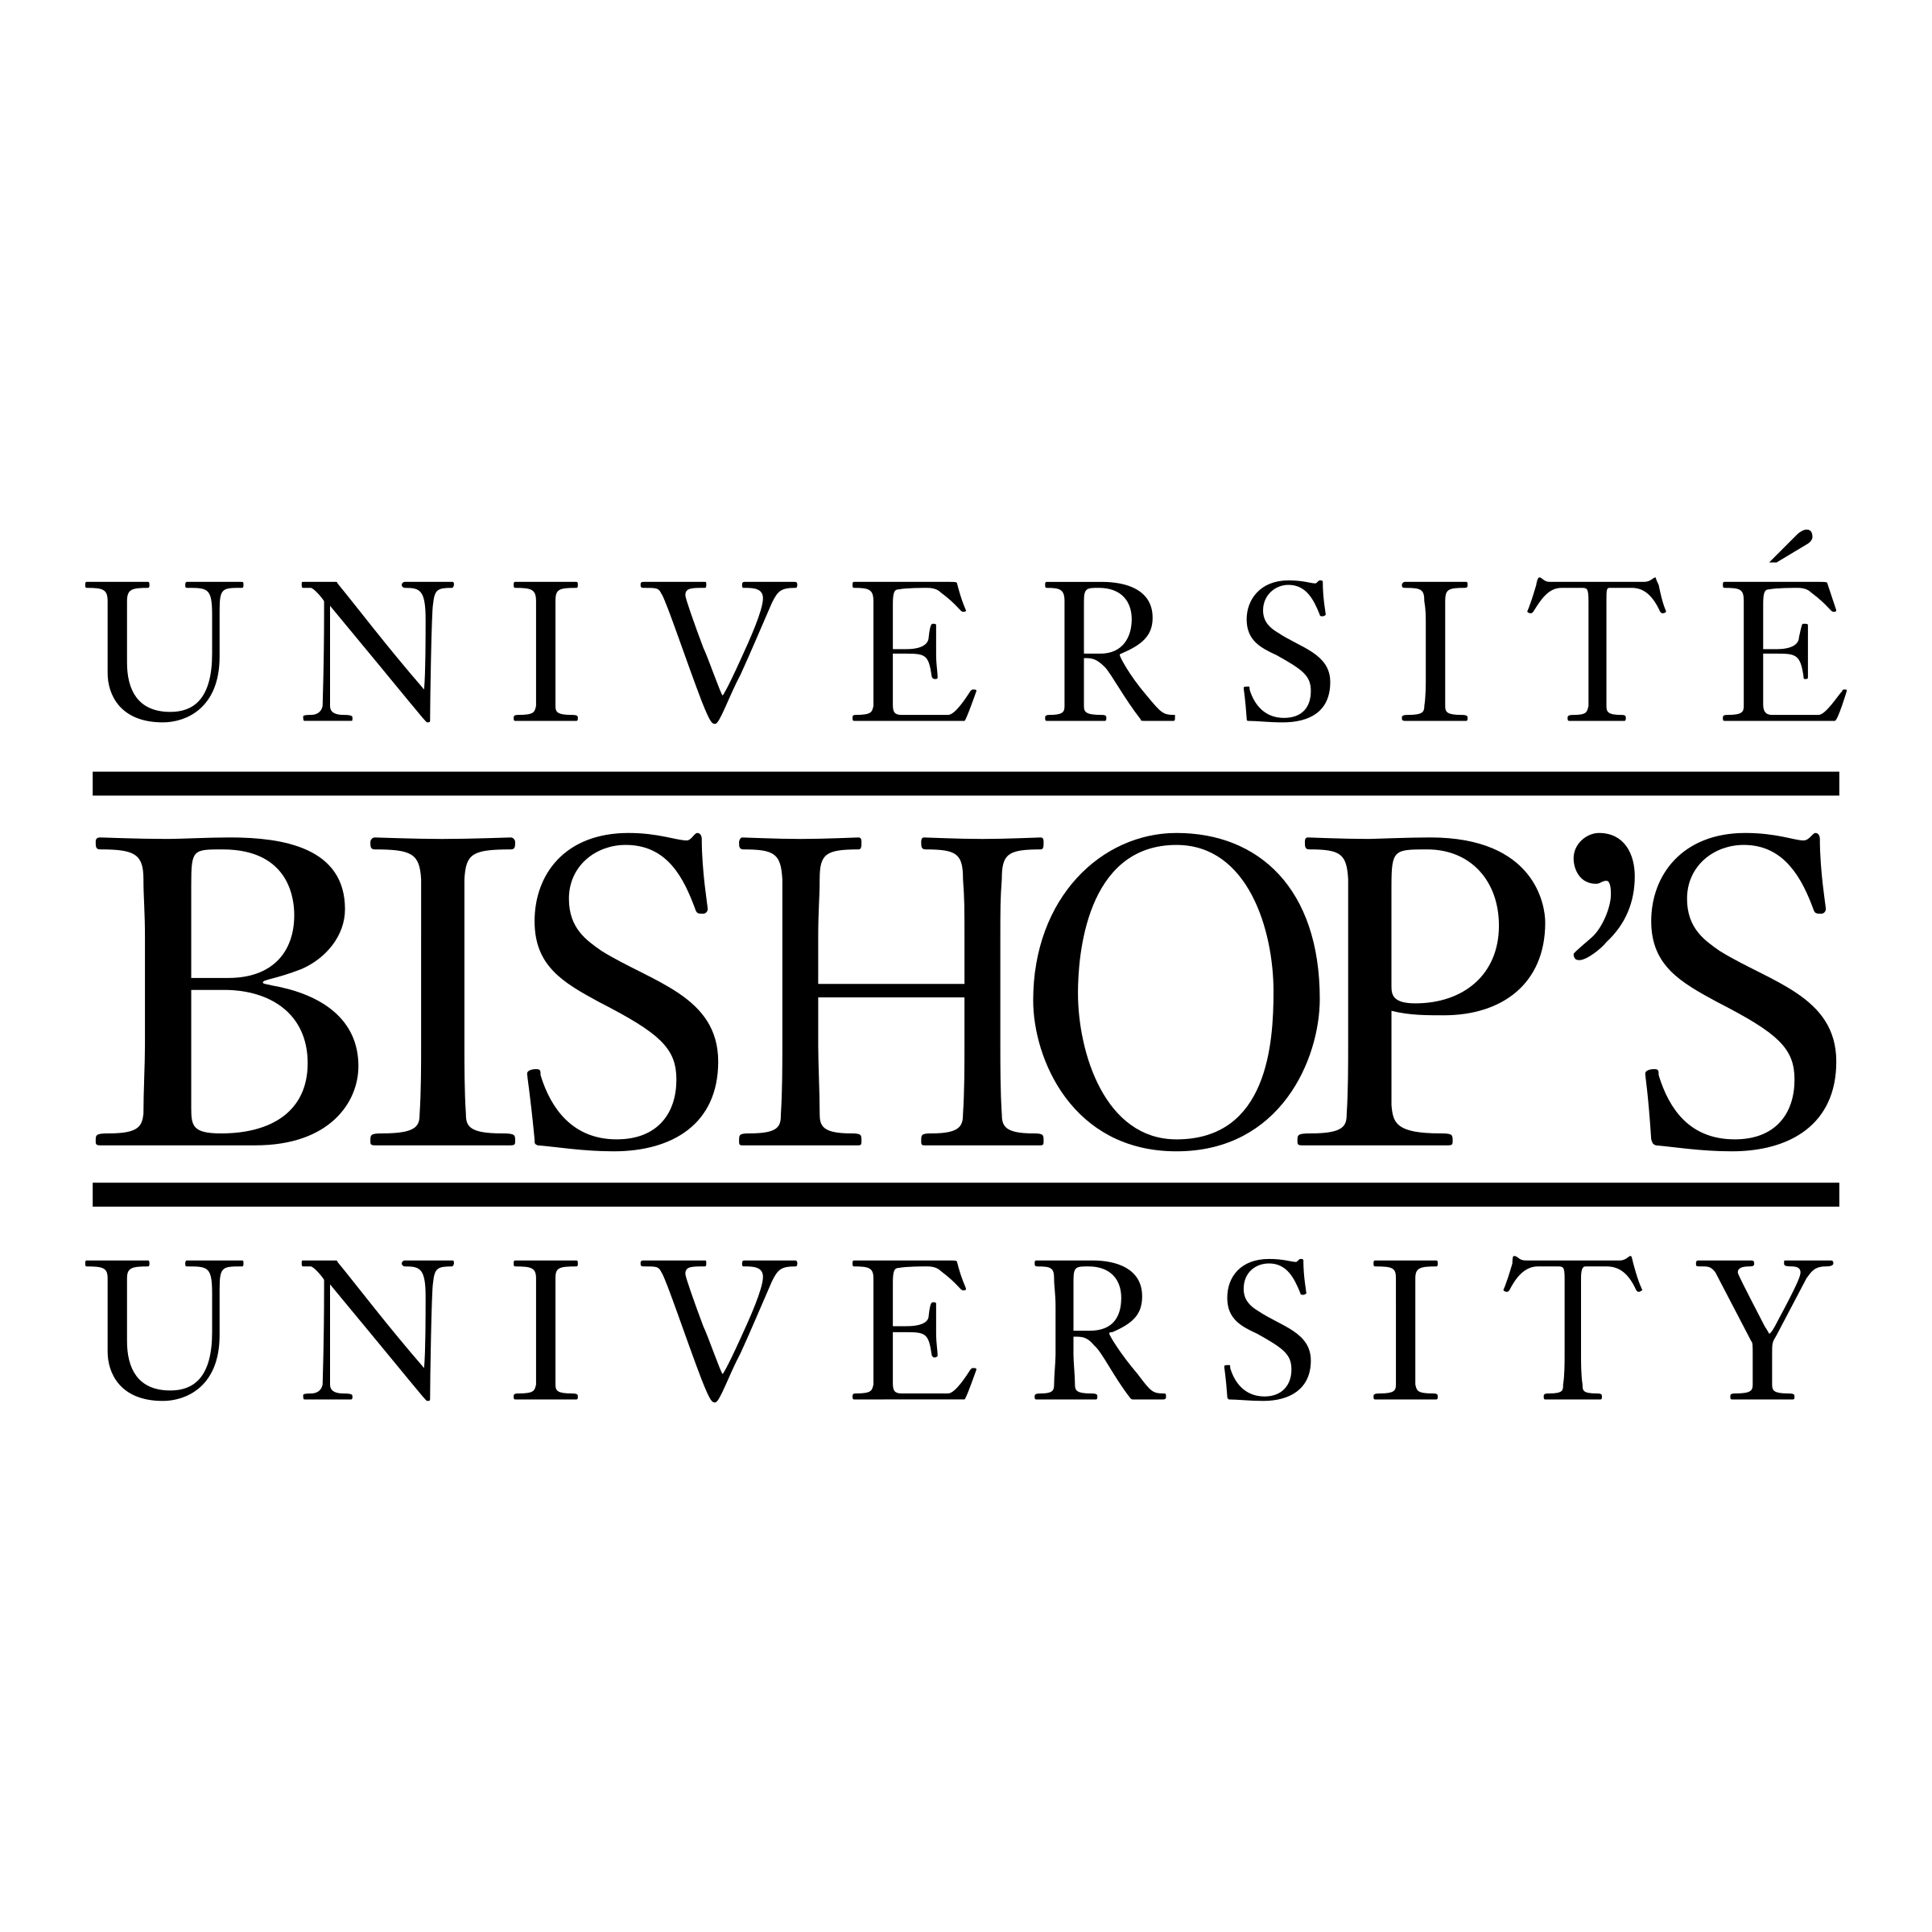 Bishop Logo - Bishop's University Logo PNG Transparent & SVG Vector - Freebie Supply